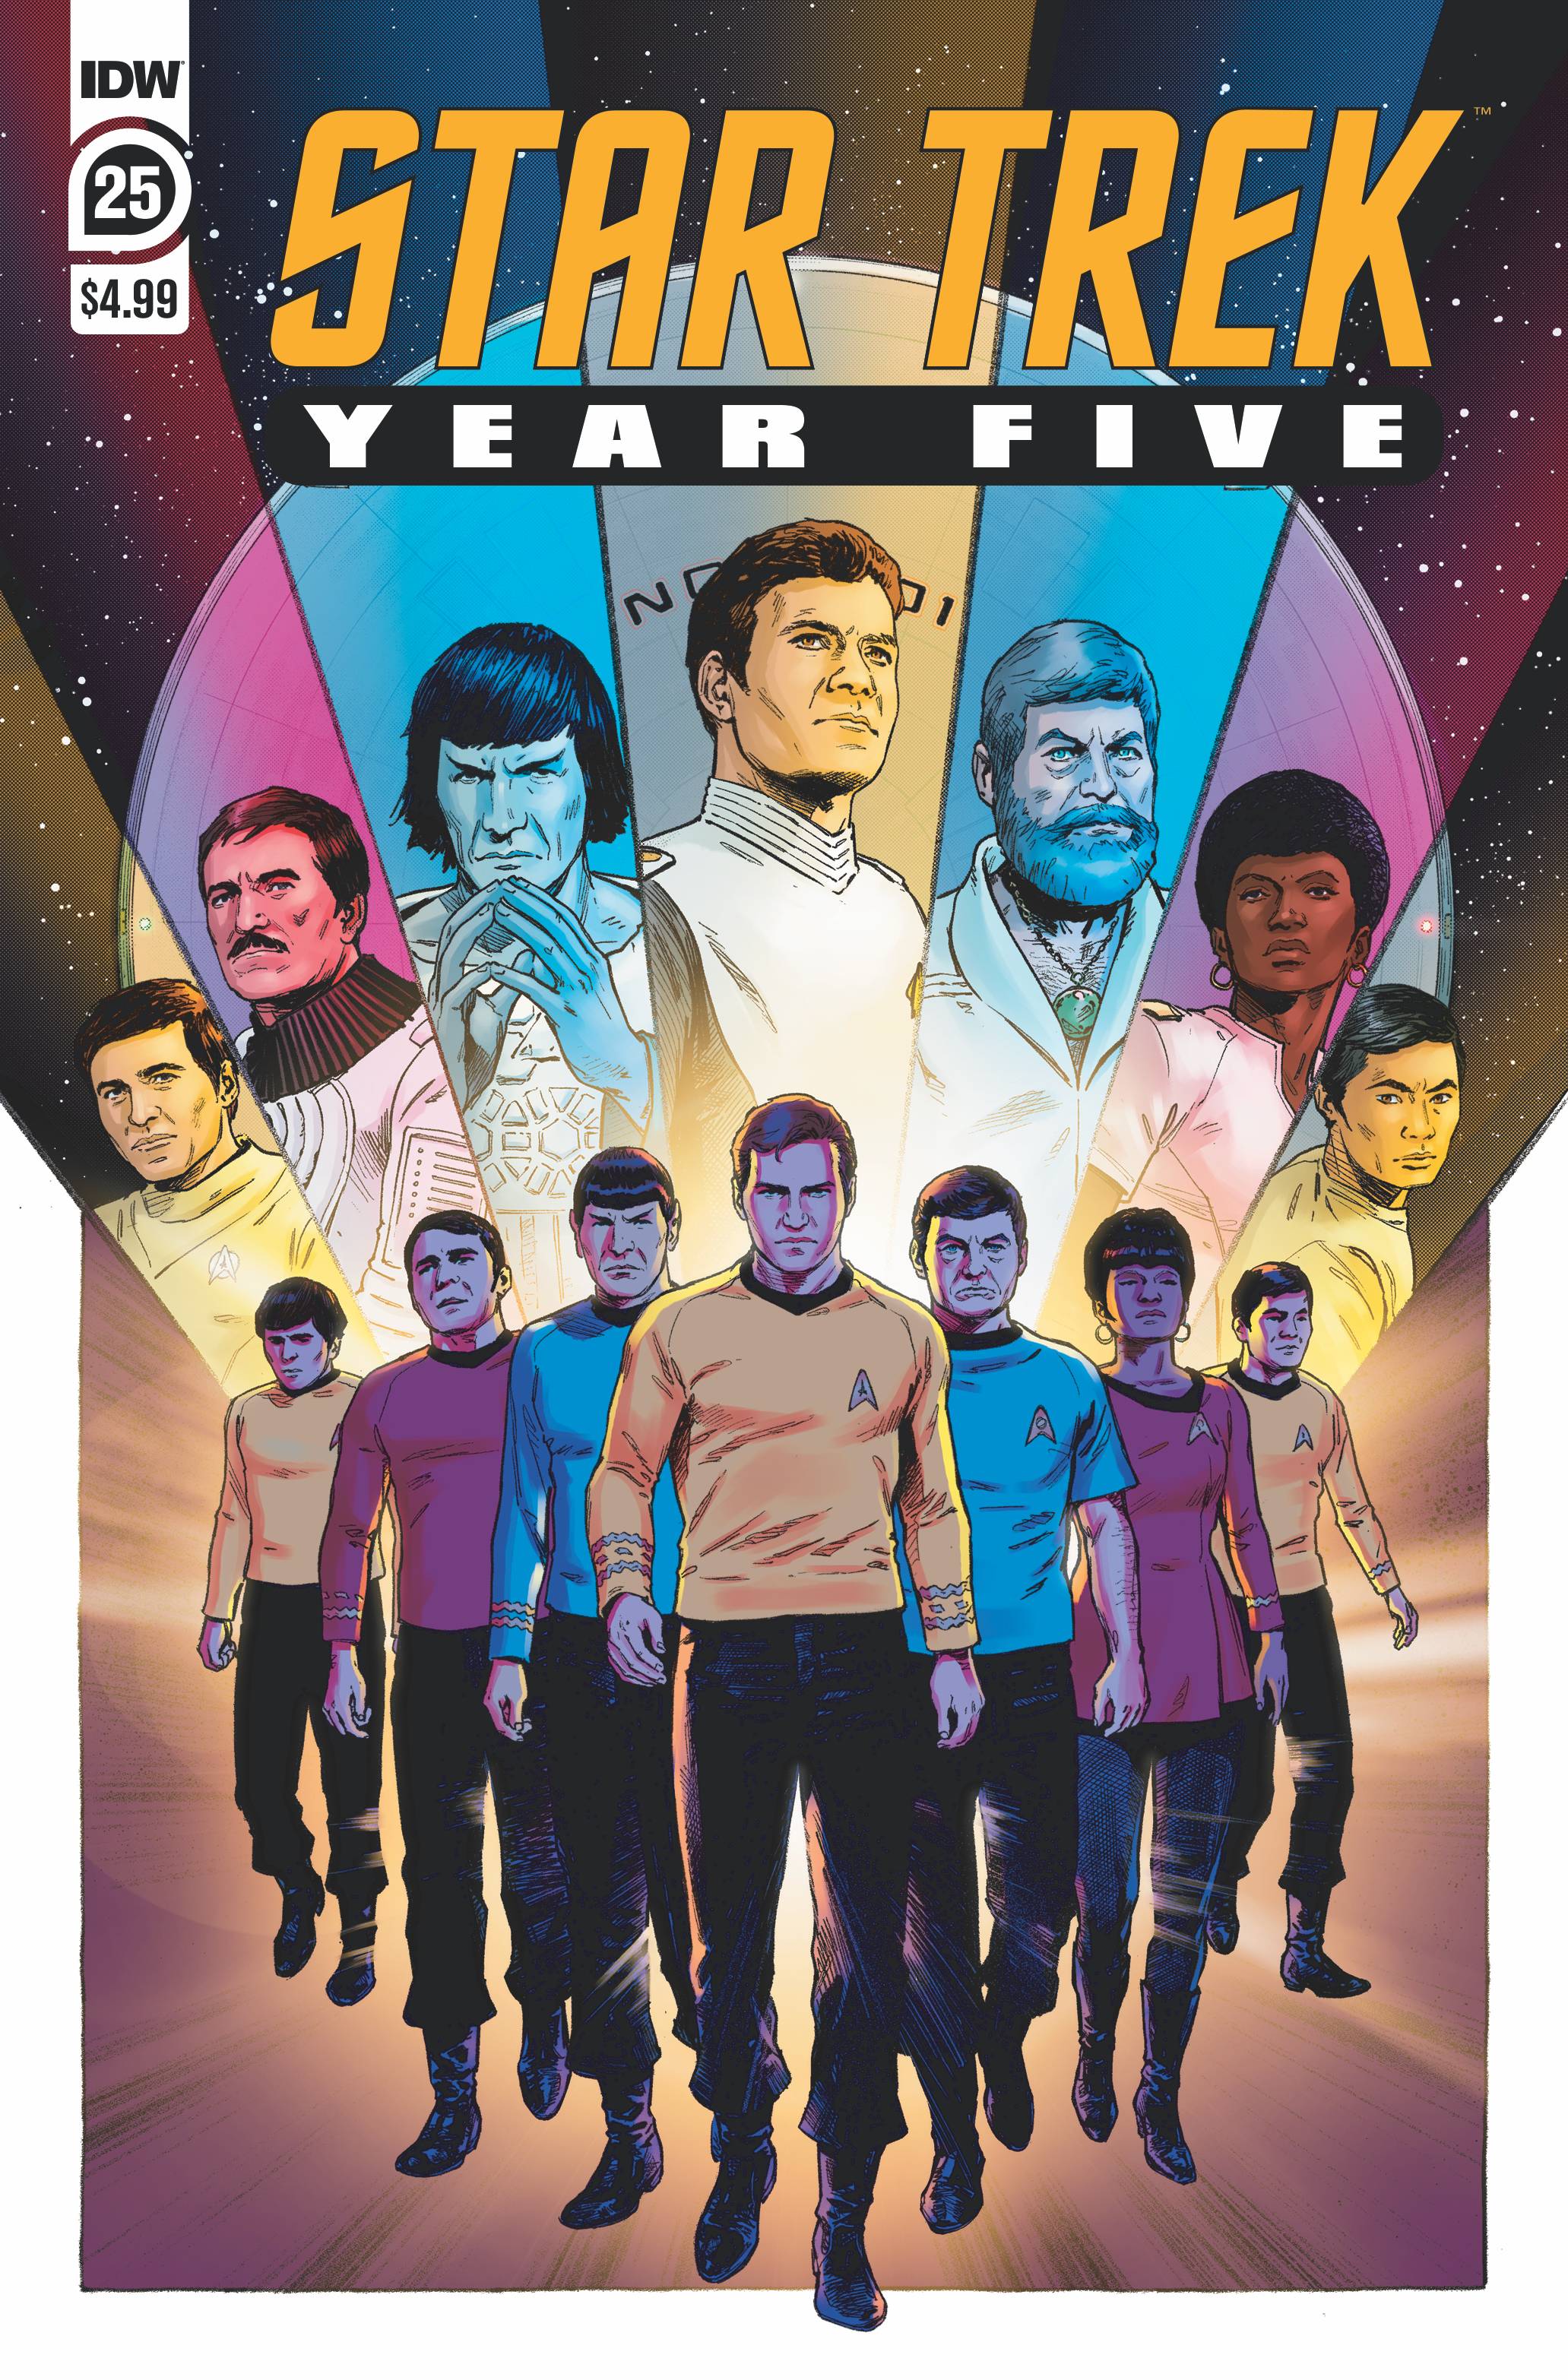 Star Trek Year Five Volume 25 Cover A Stephen Thompson